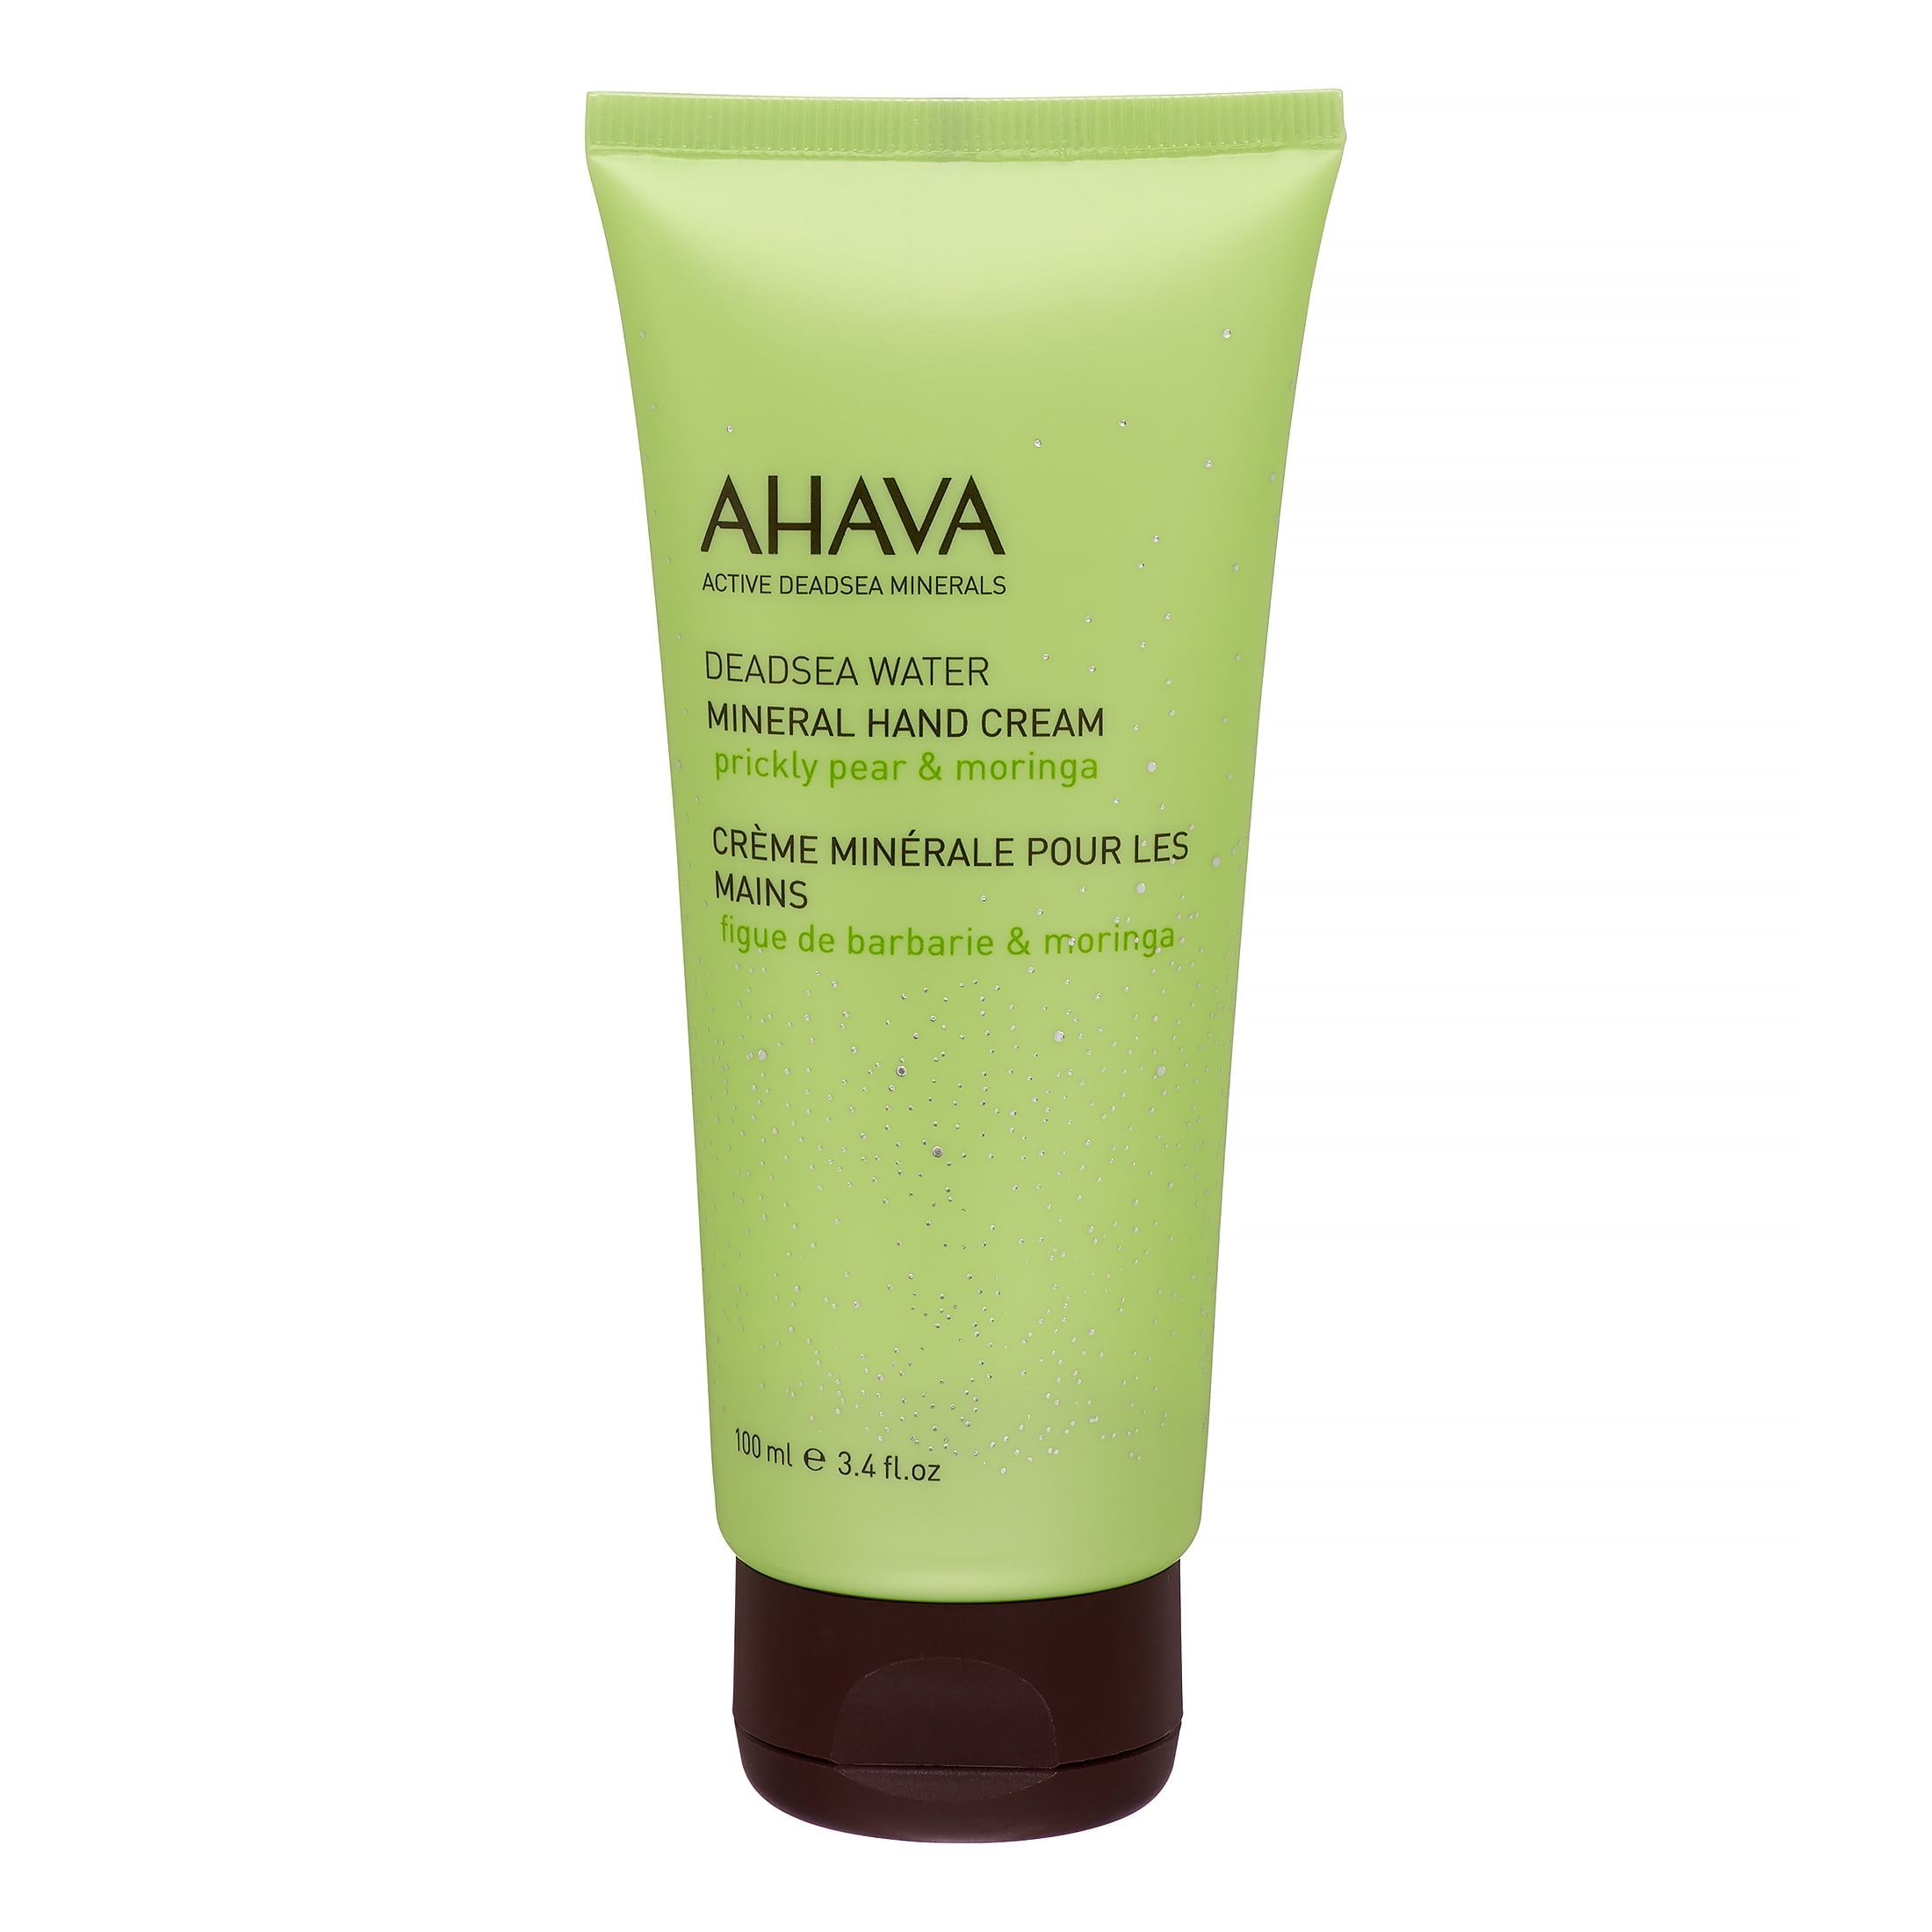 24 Value) Ahava Deadsea Water Mineral Hand Cream, Prickly Pear & Moringa,  3.4 Oz